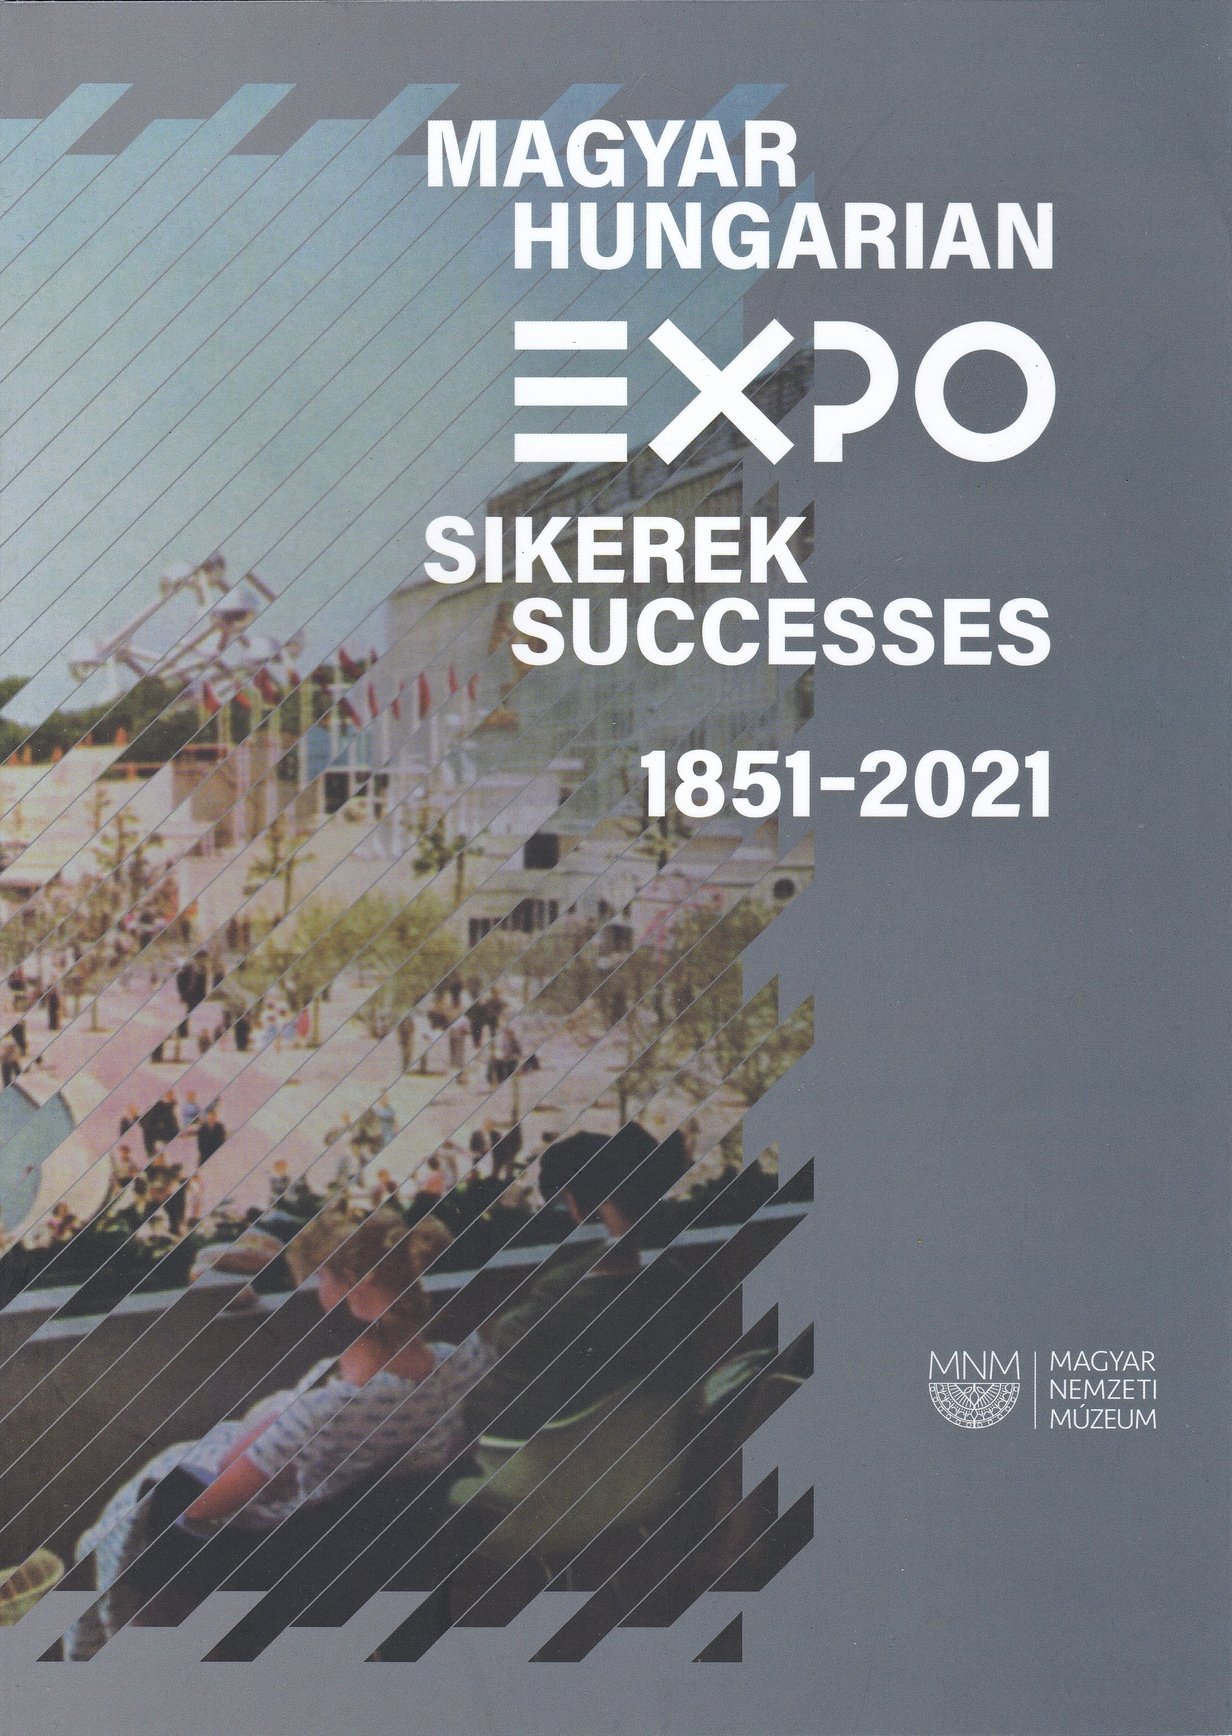 Magyar Expo sikerek 1851-2021 (Rippl-Rónai Múzeum CC BY-NC-ND)